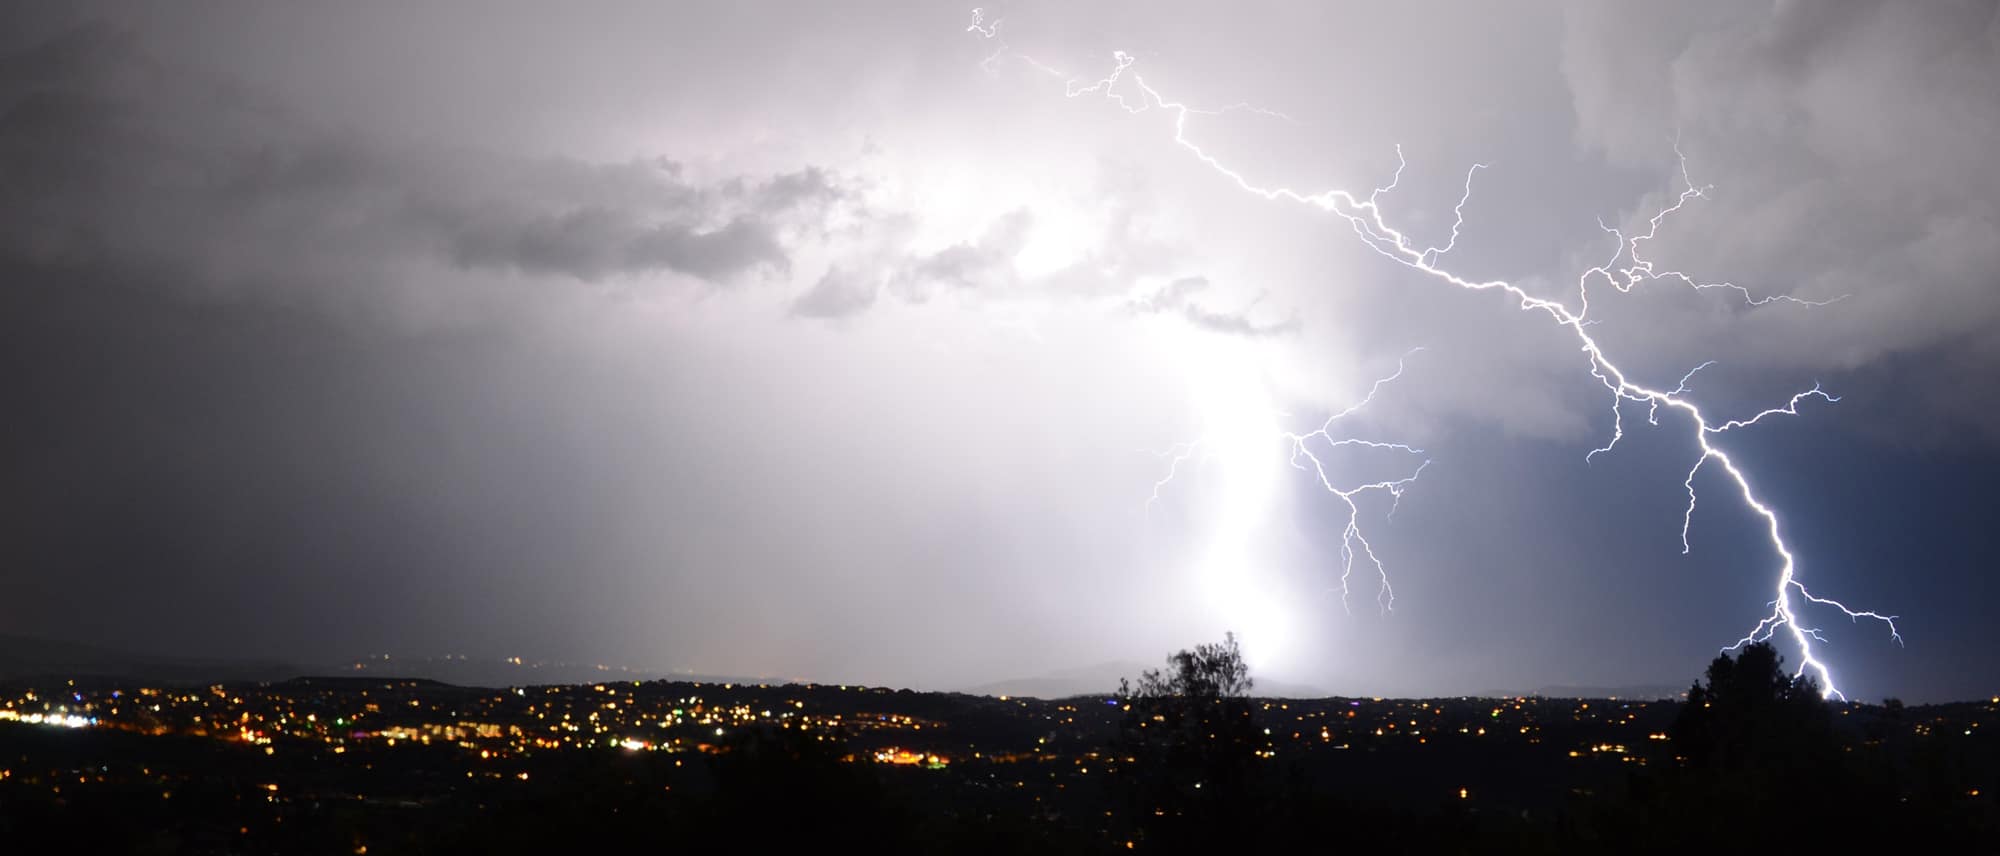 Lightning storm over Prescott, Arizona